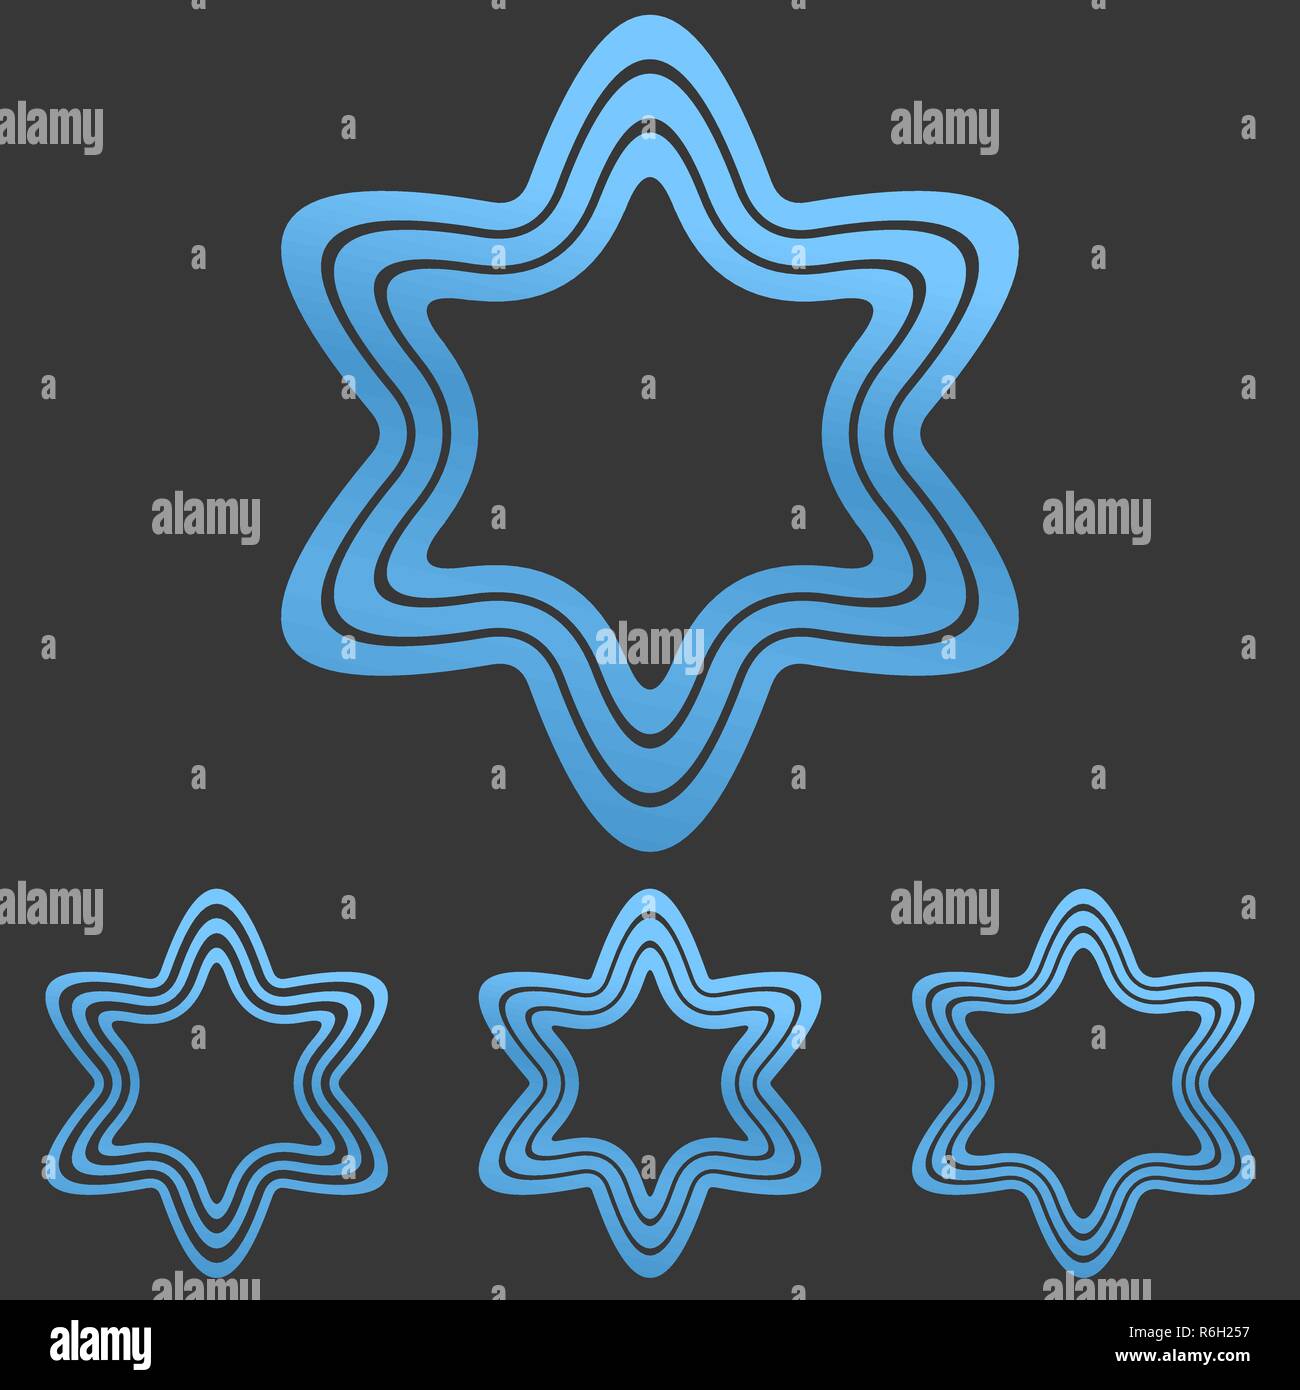 Blue line star logo design set Stock Vector